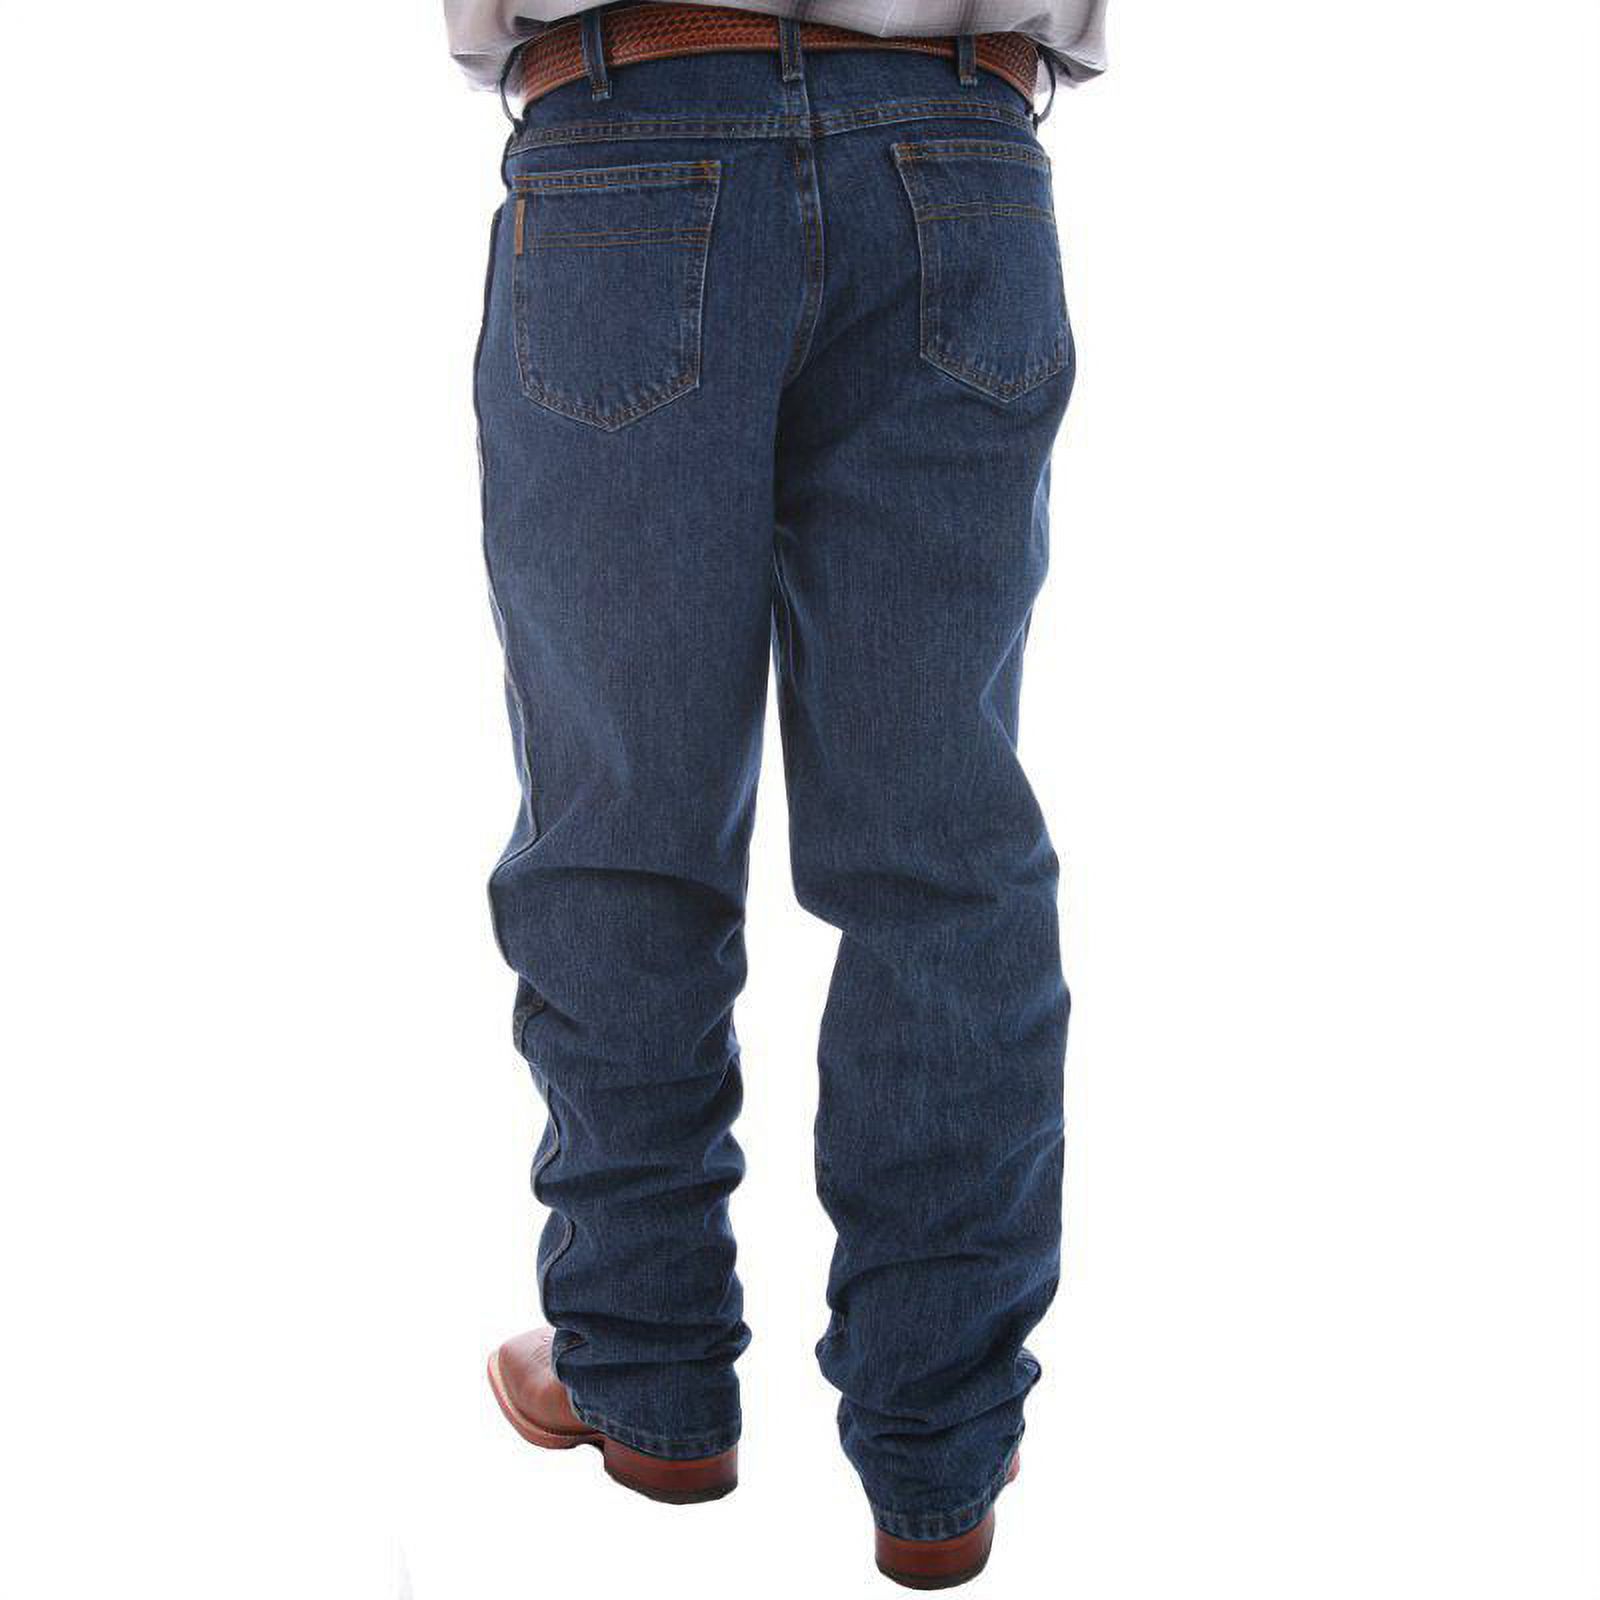 Cinch Western Jeans Mens Green Label 35 x 34 Dark Wash MB90530002 - image 1 of 4